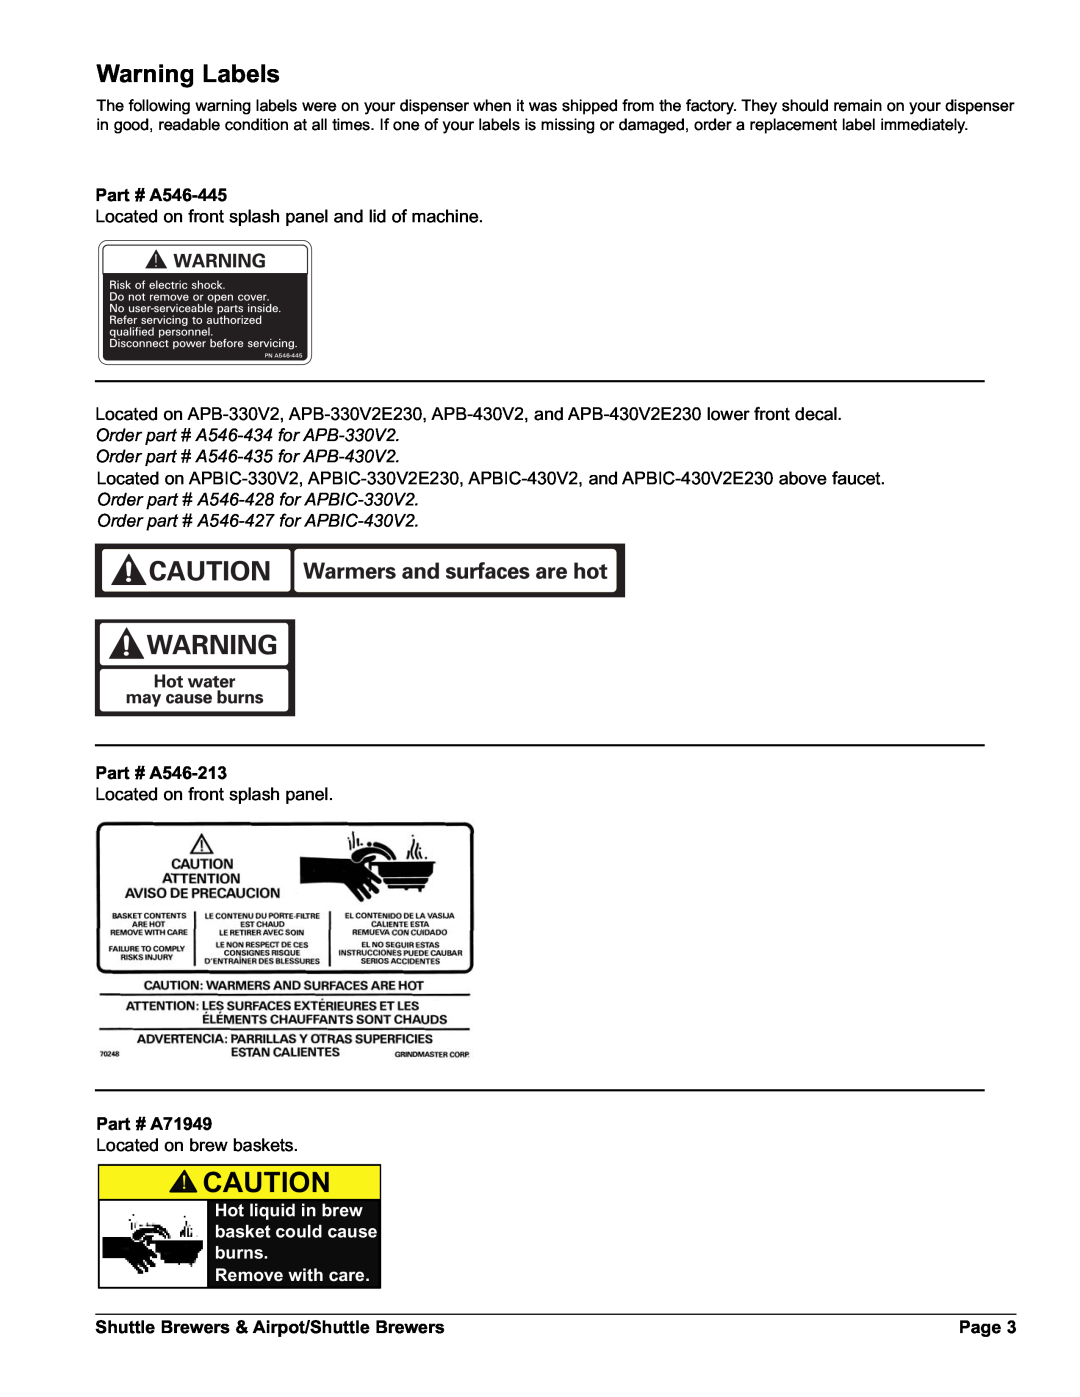 Grindmaster APBVSA-430V2, APBVSA-330V2E230 Warning Labels, A546-445, Order part # A546-435 for APB-430V2, A546-213, A71949 